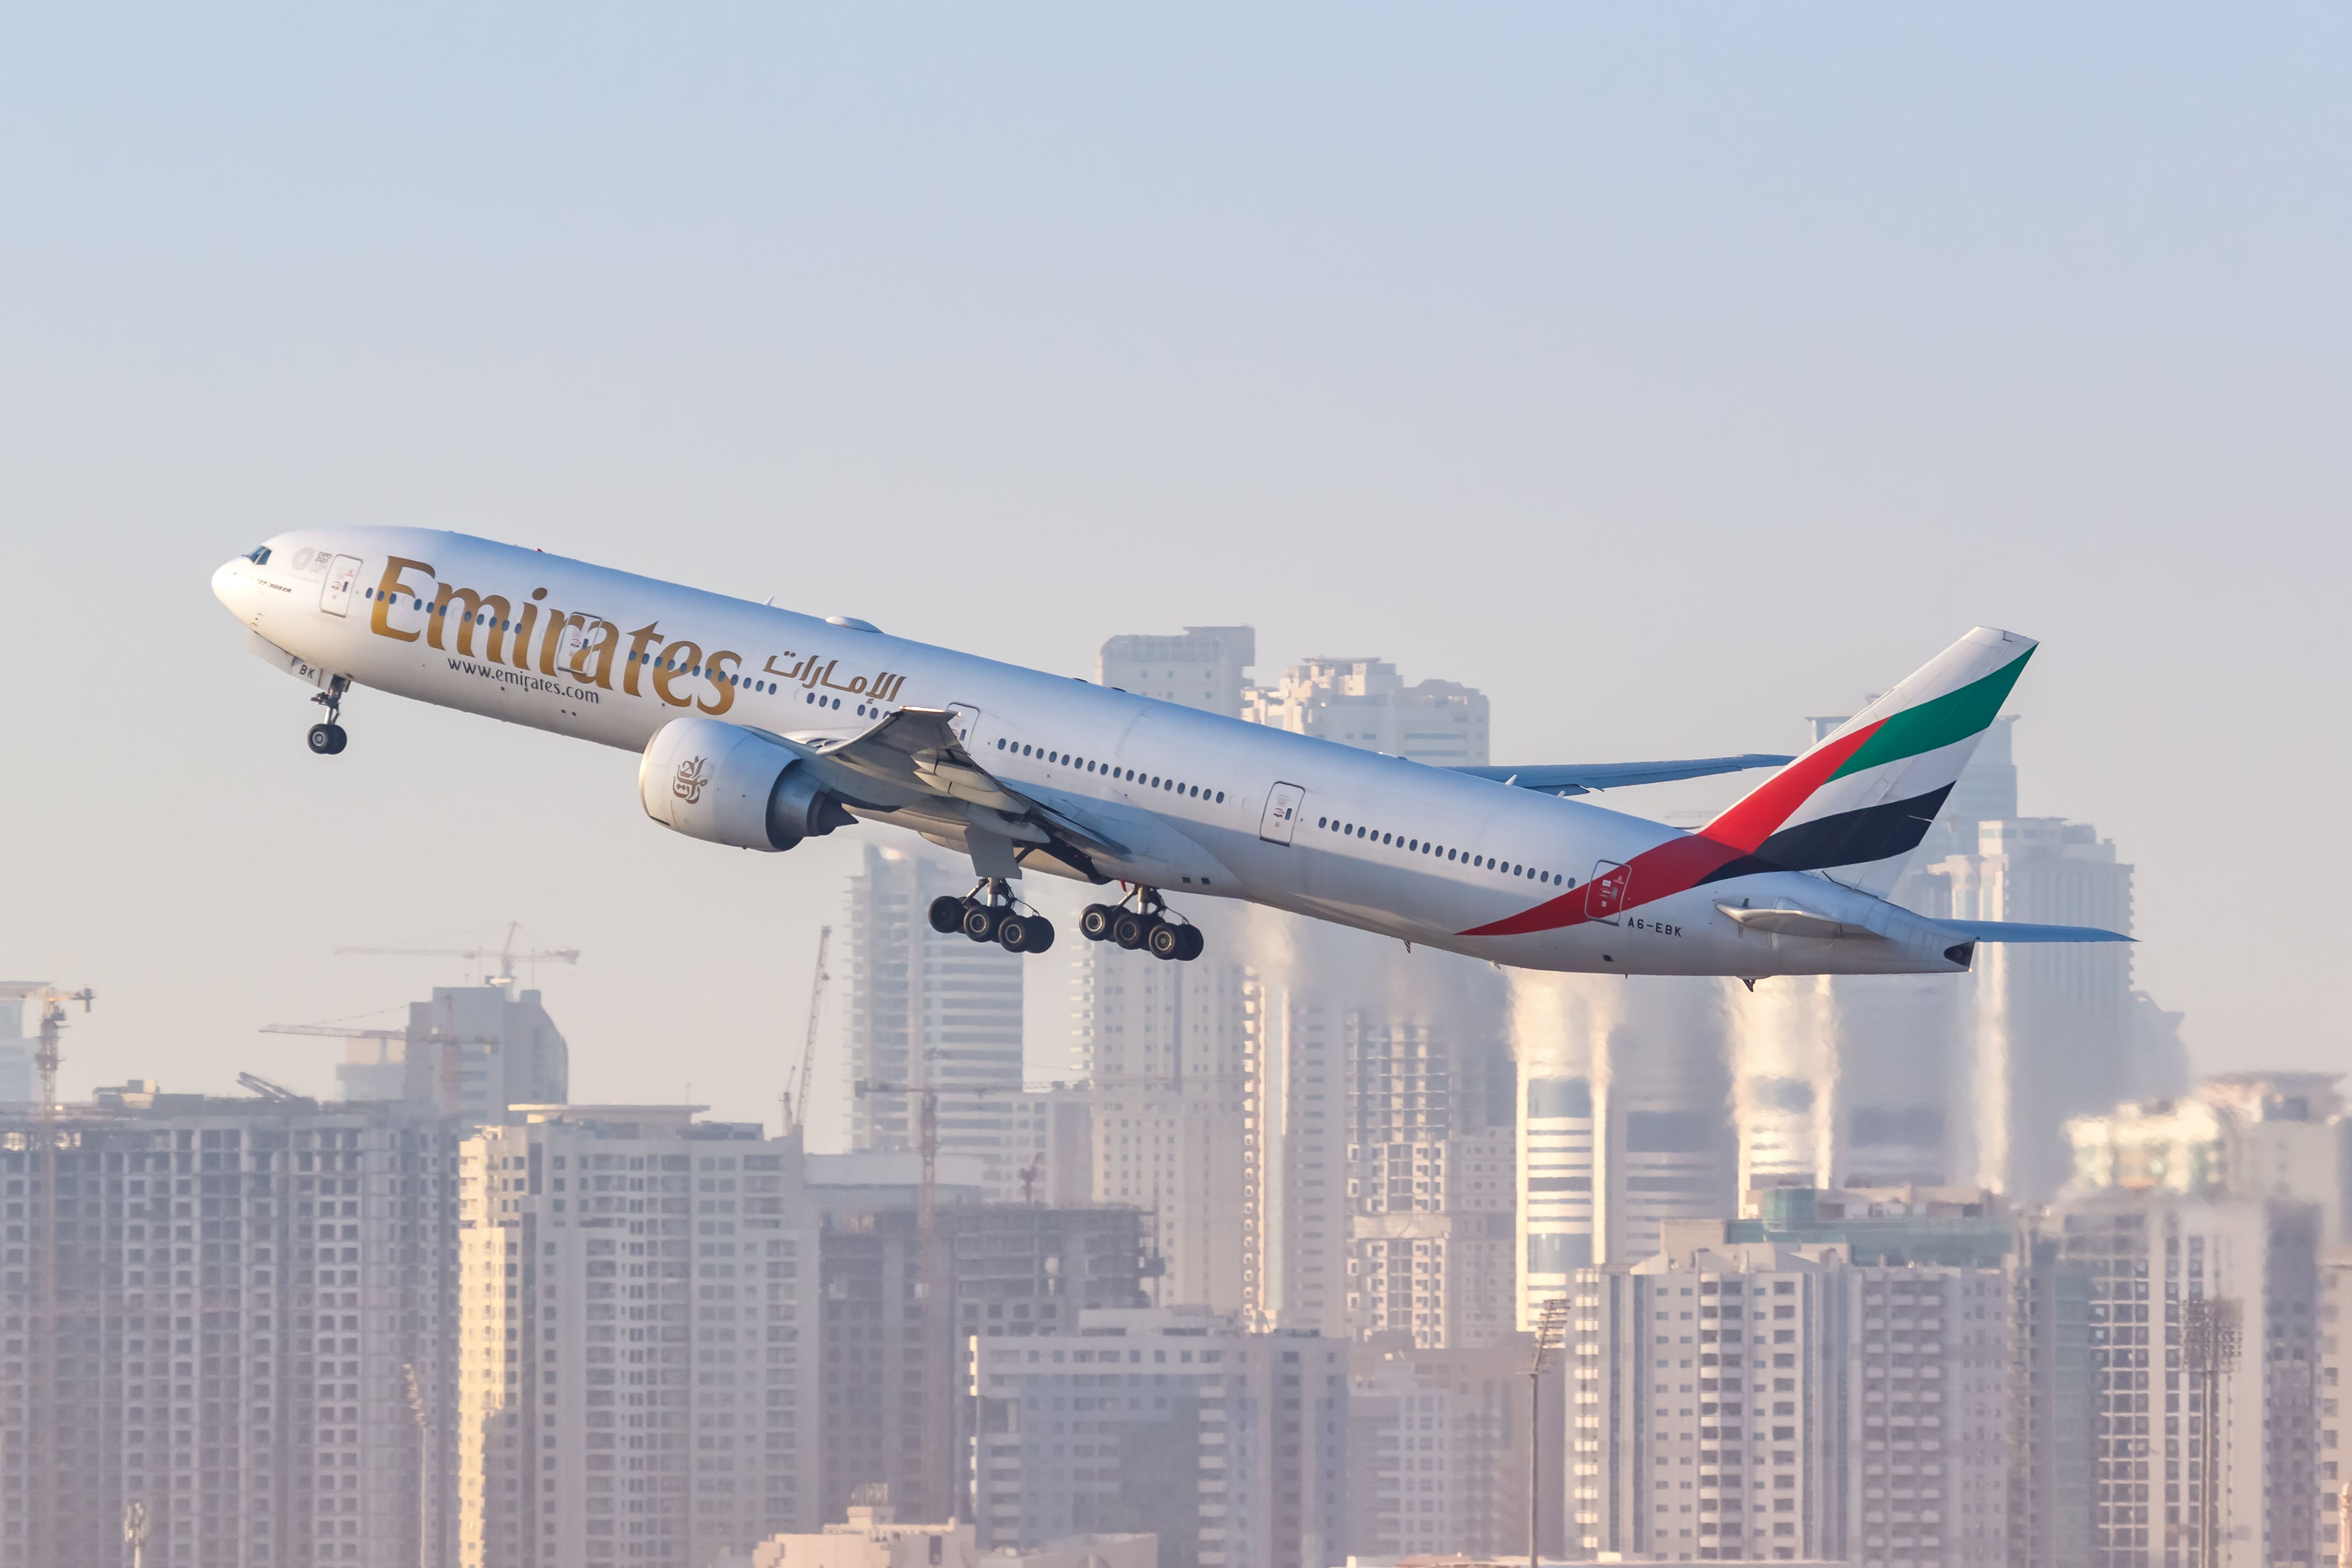 Emirates Boeing 777-300ER airplane at Dubai airport (DXB) in the United Arab Emirates.